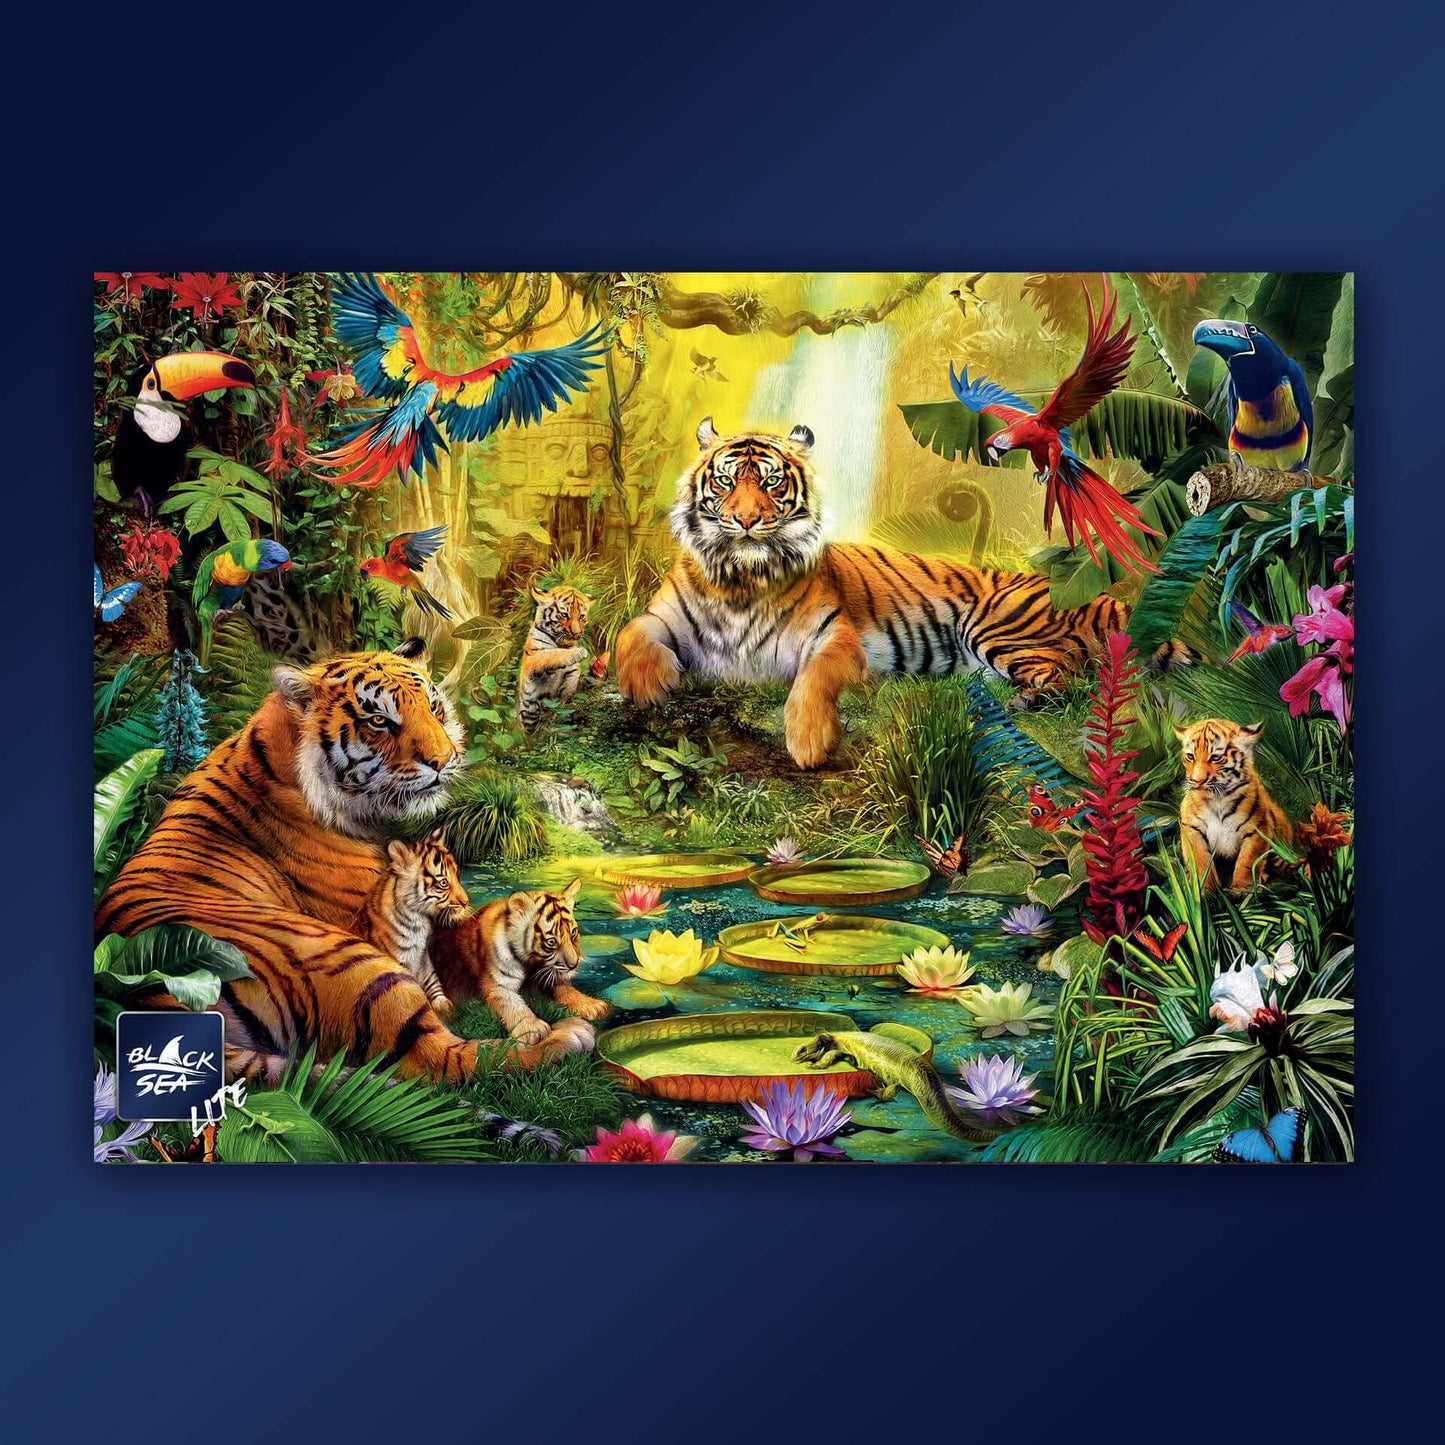 Puzzle Black Sea 1000 pieces - Tiger Family in the Jungle, -